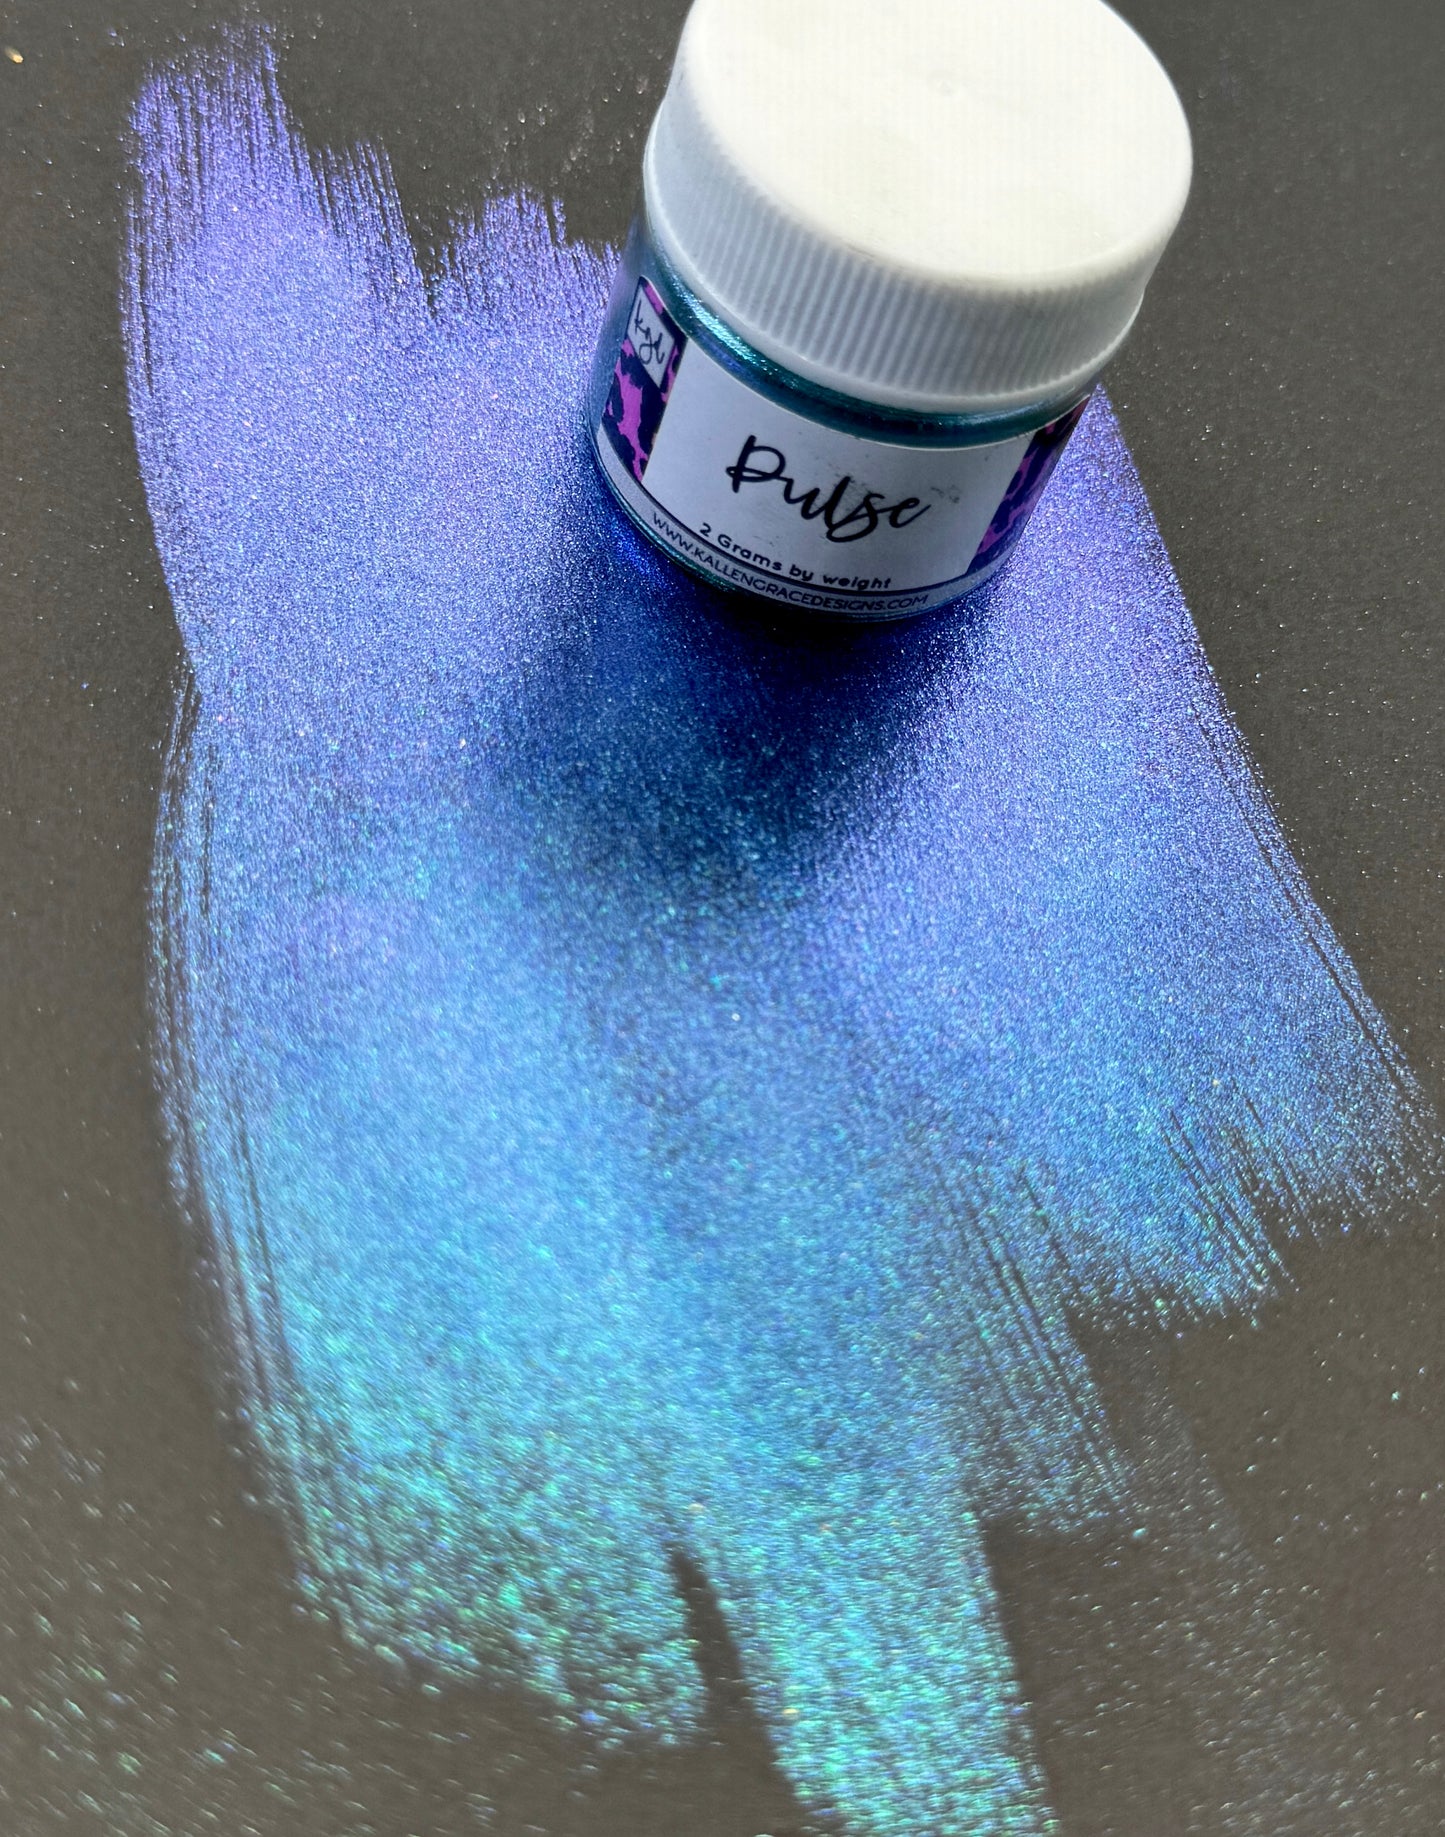 Pulse // Holographic Chameleon Pigment